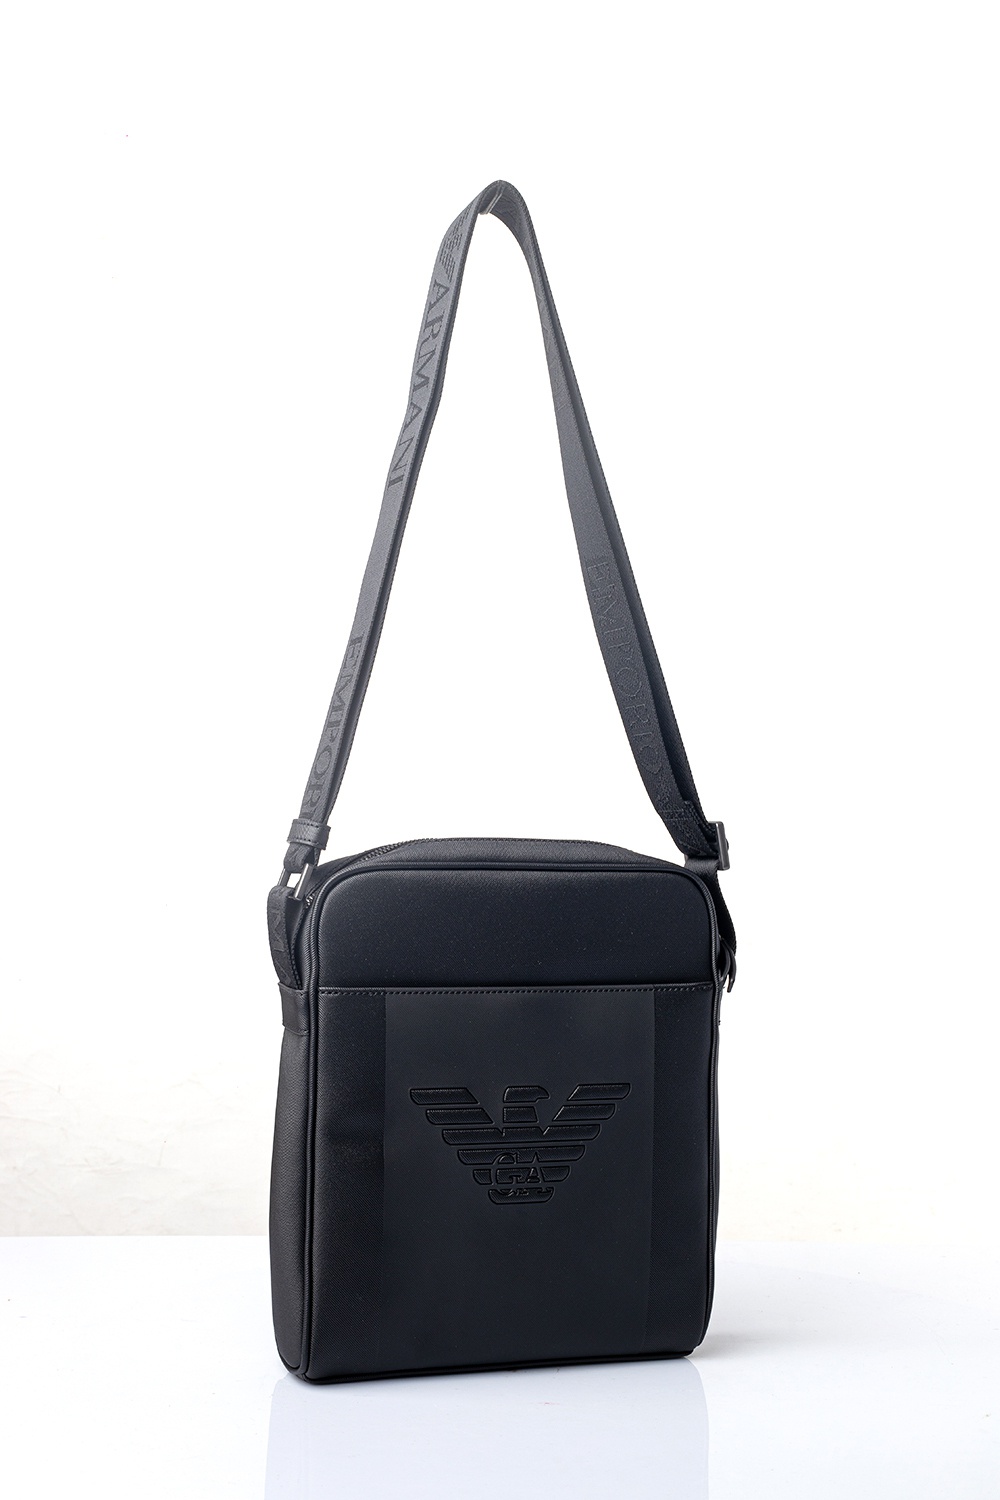 Emporio Armani Men's Black Messenger Bag 